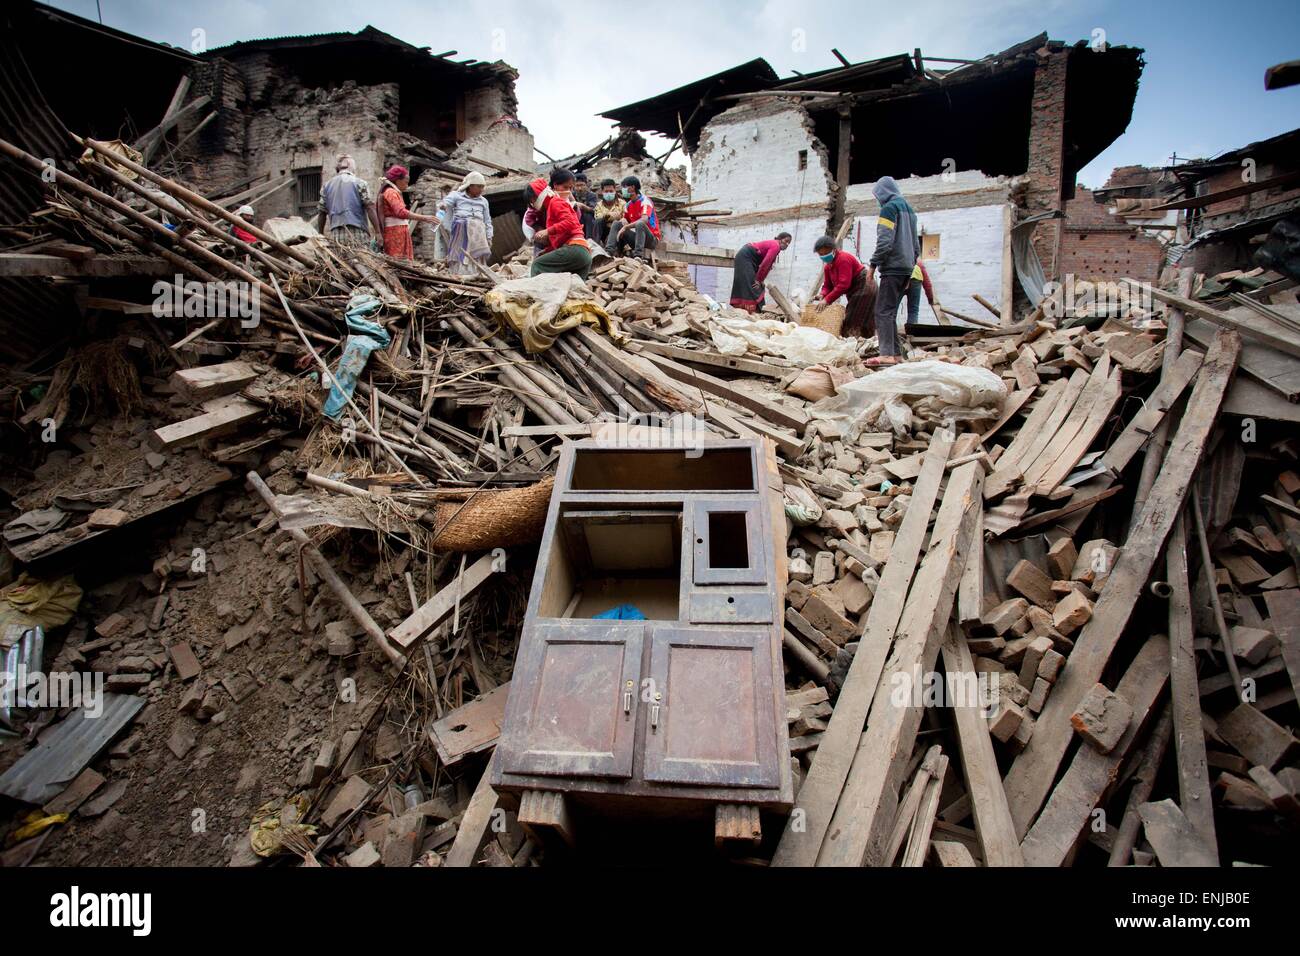 May 1 2015 May 1 2015 Kathmandu Nepal Earthquake Victim Search Their Belongings From